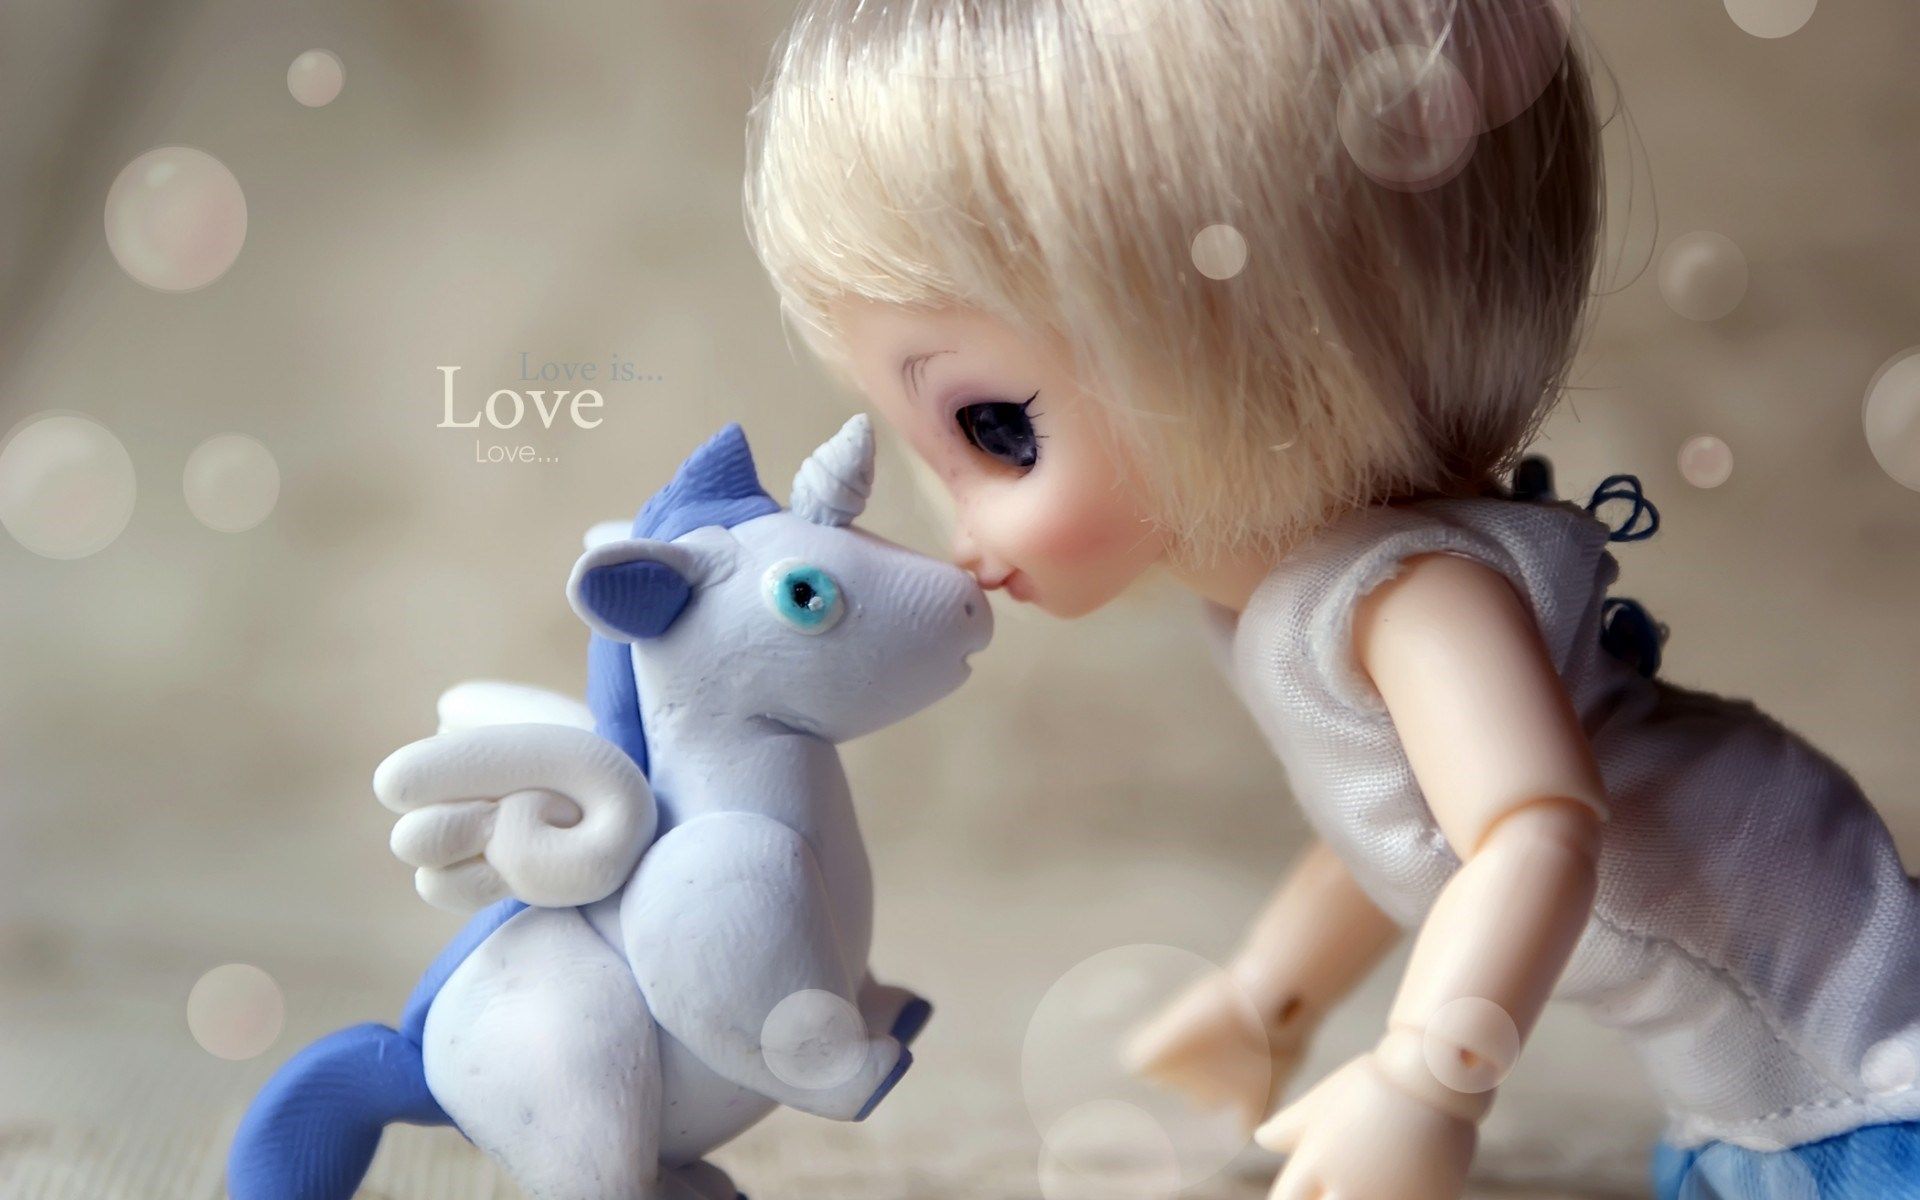 HD wallpaper, Love, Unicorn, Doll, Tenderness